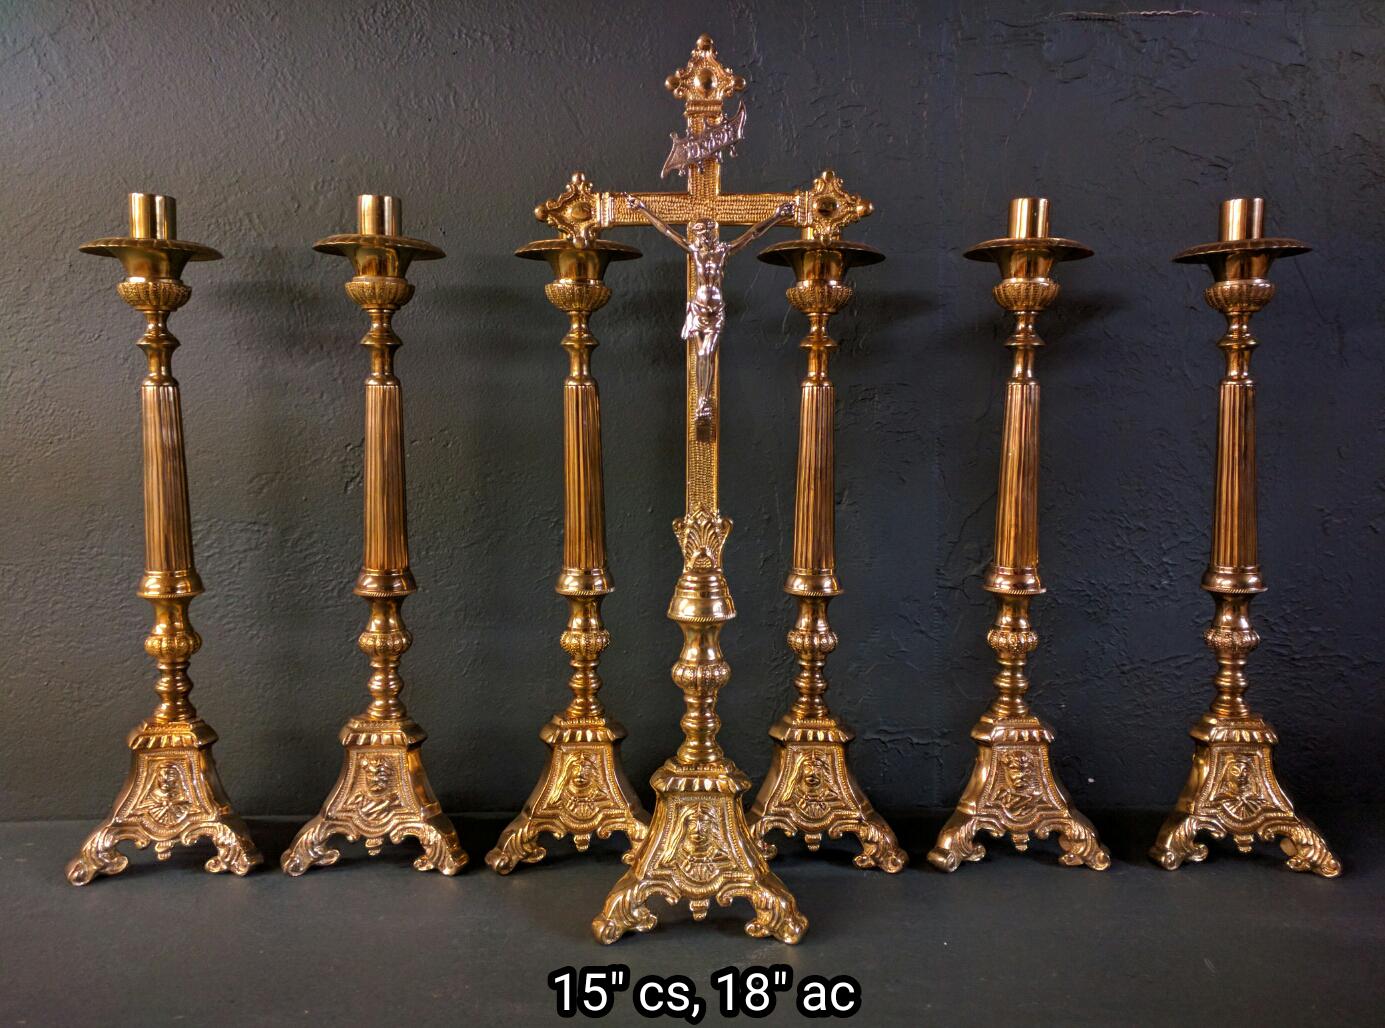 Altar Candles